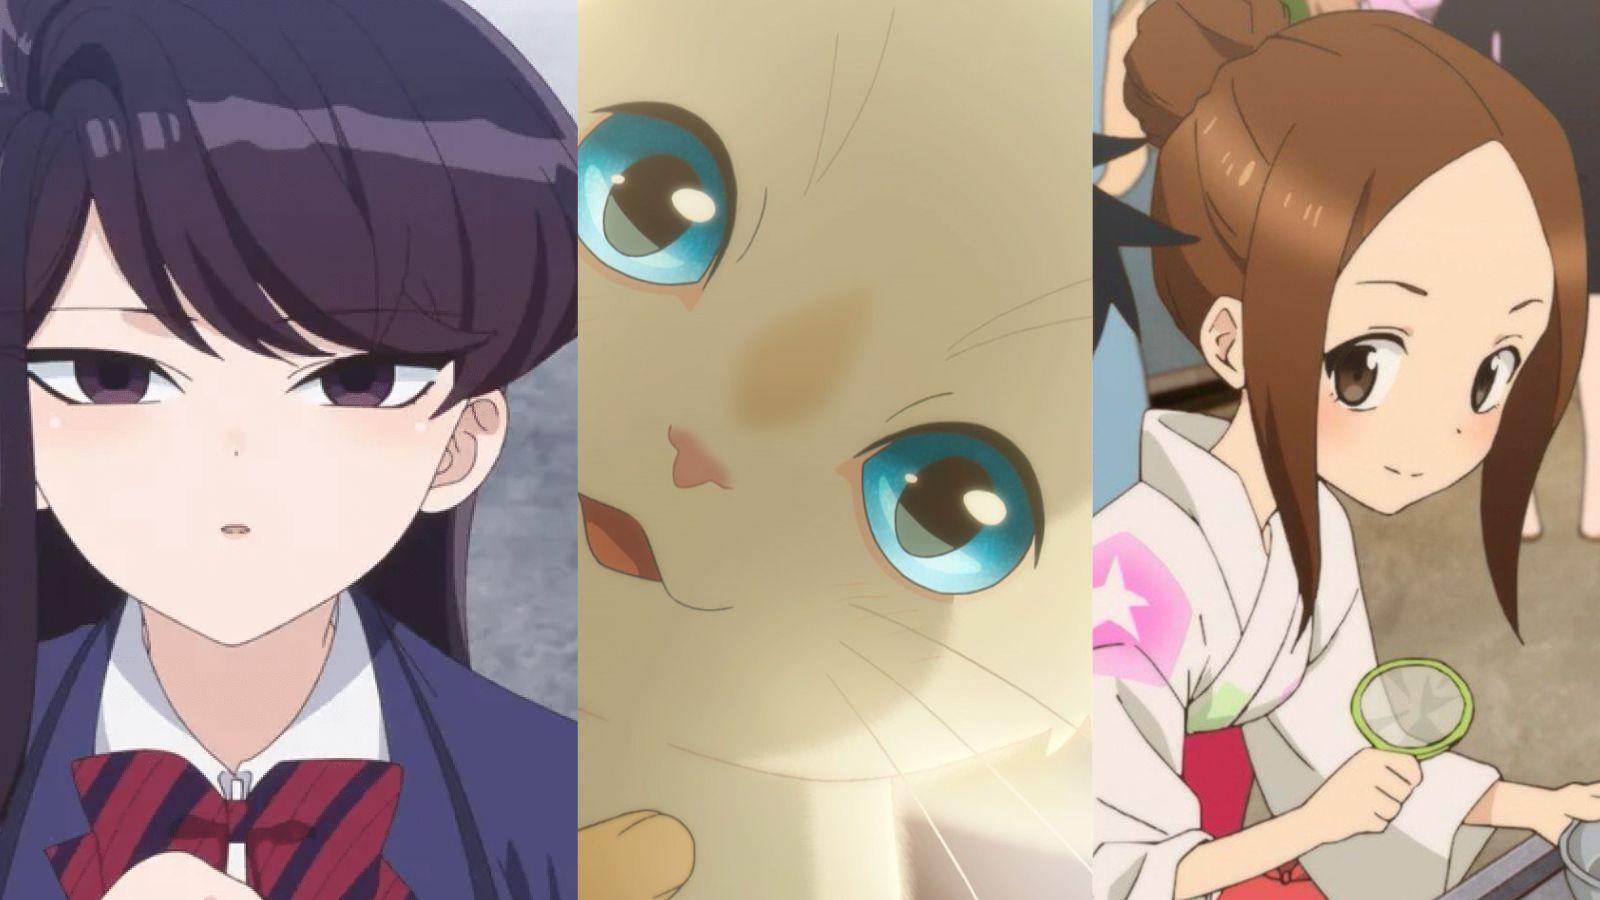 20 Best Romance Anime on Netflix (Ranked)